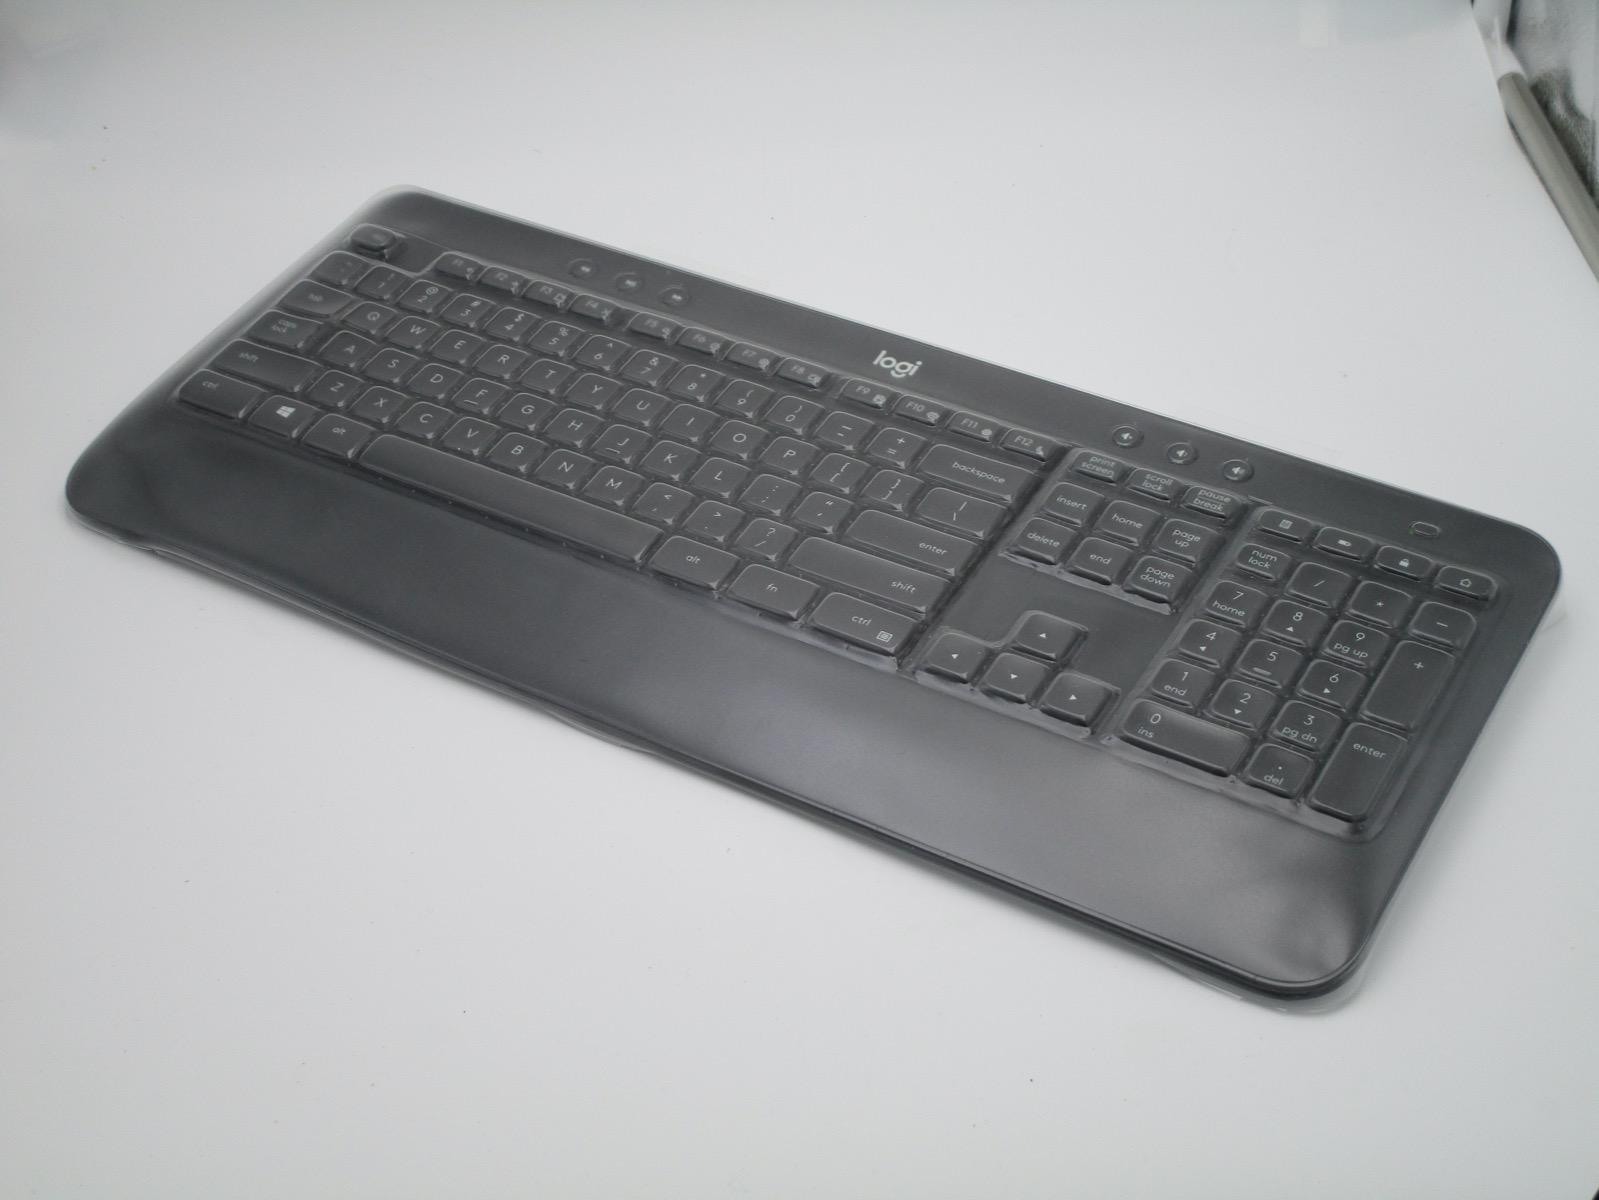 Logitech MK540 | MK650 Keyboard Cover